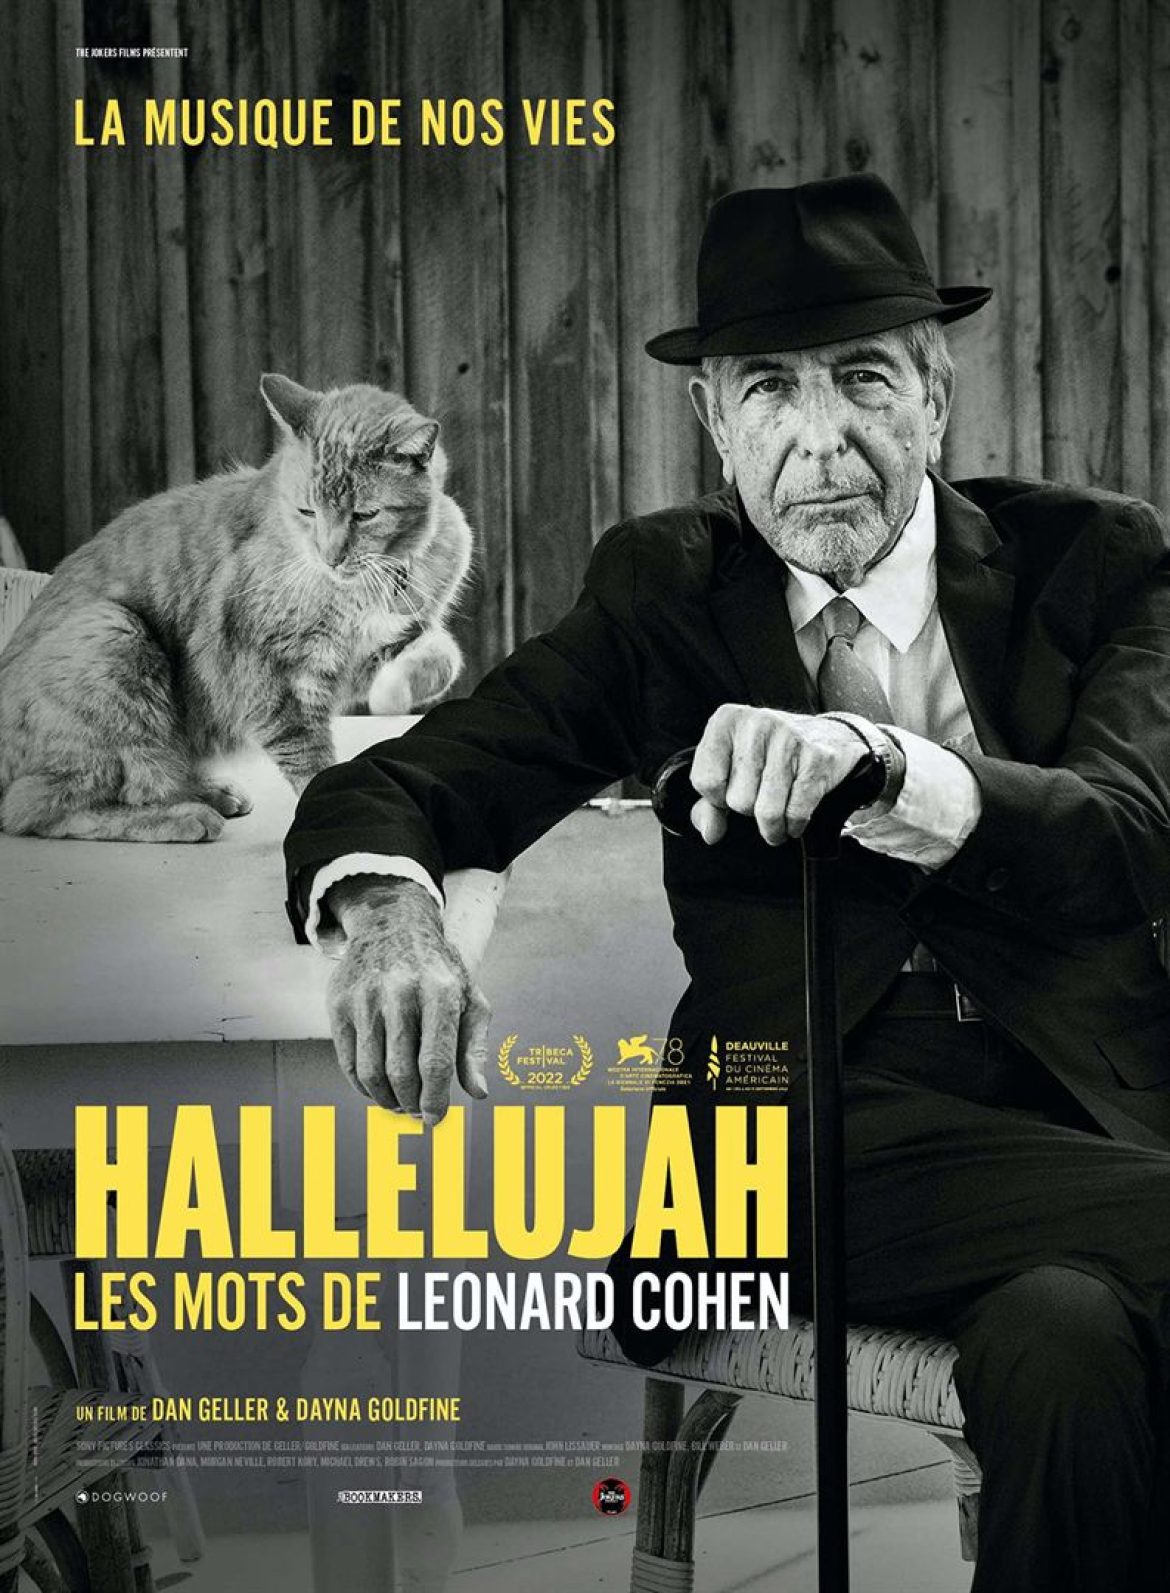 Hallelujah : Leonard Cohen, a Journey, a Song